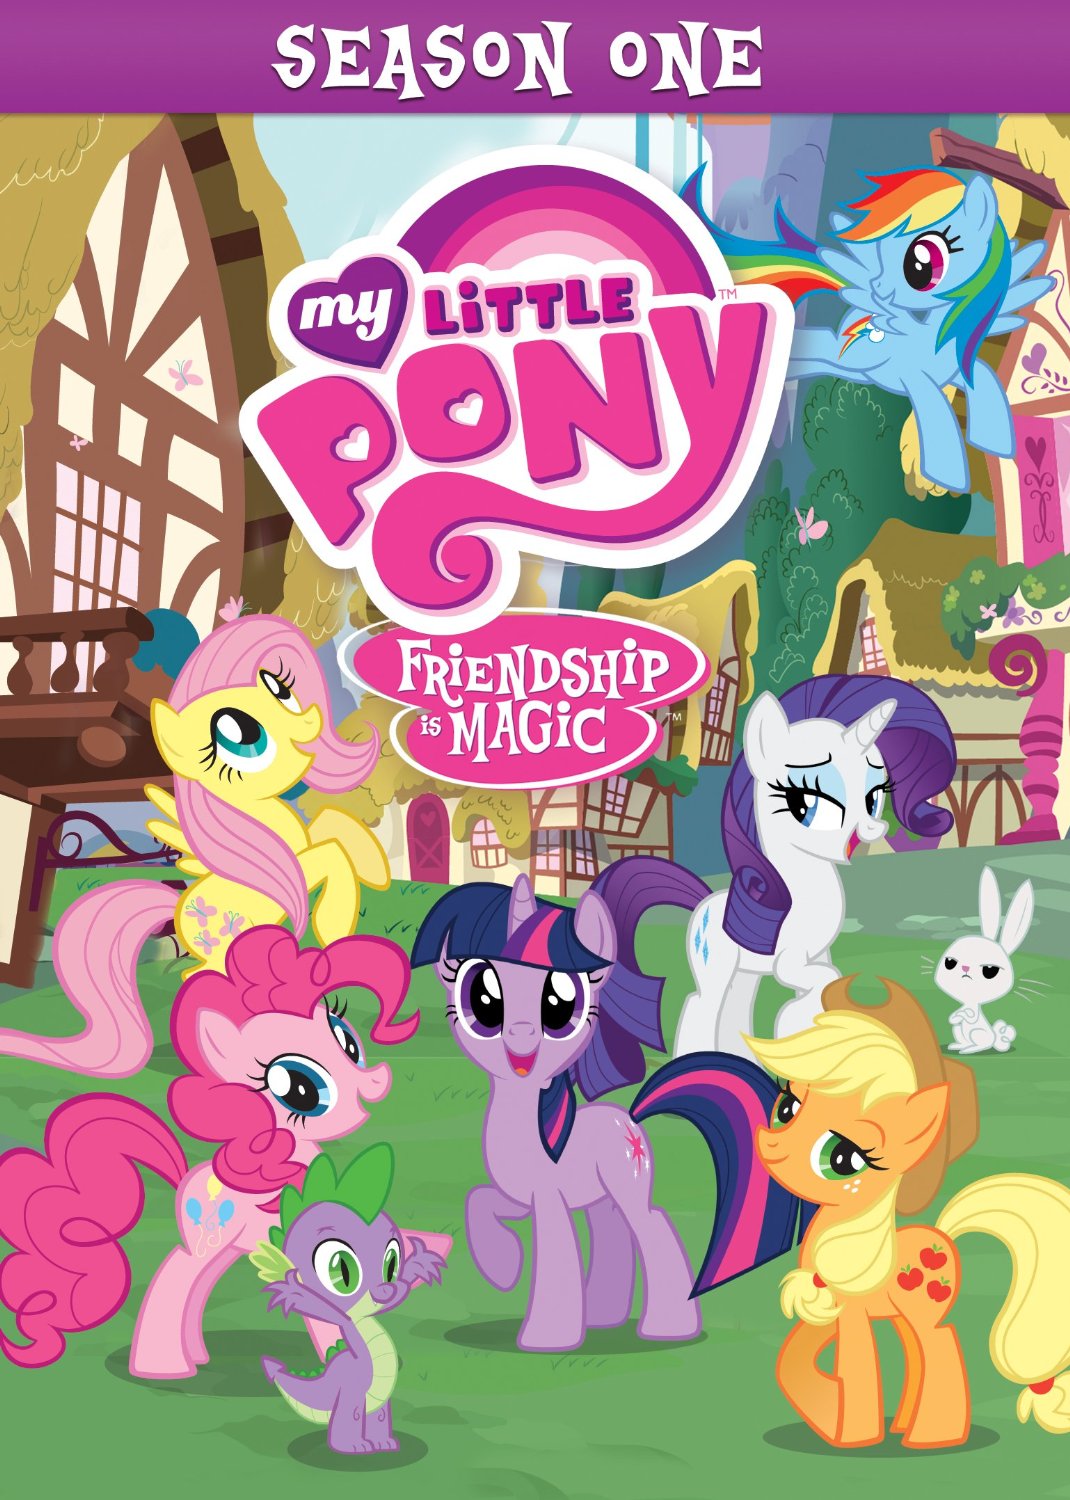 My Little Pony: | Twilight Sparkle\'s Fandom One Season | is Library Friendship Magic: Media (DVD) Retro